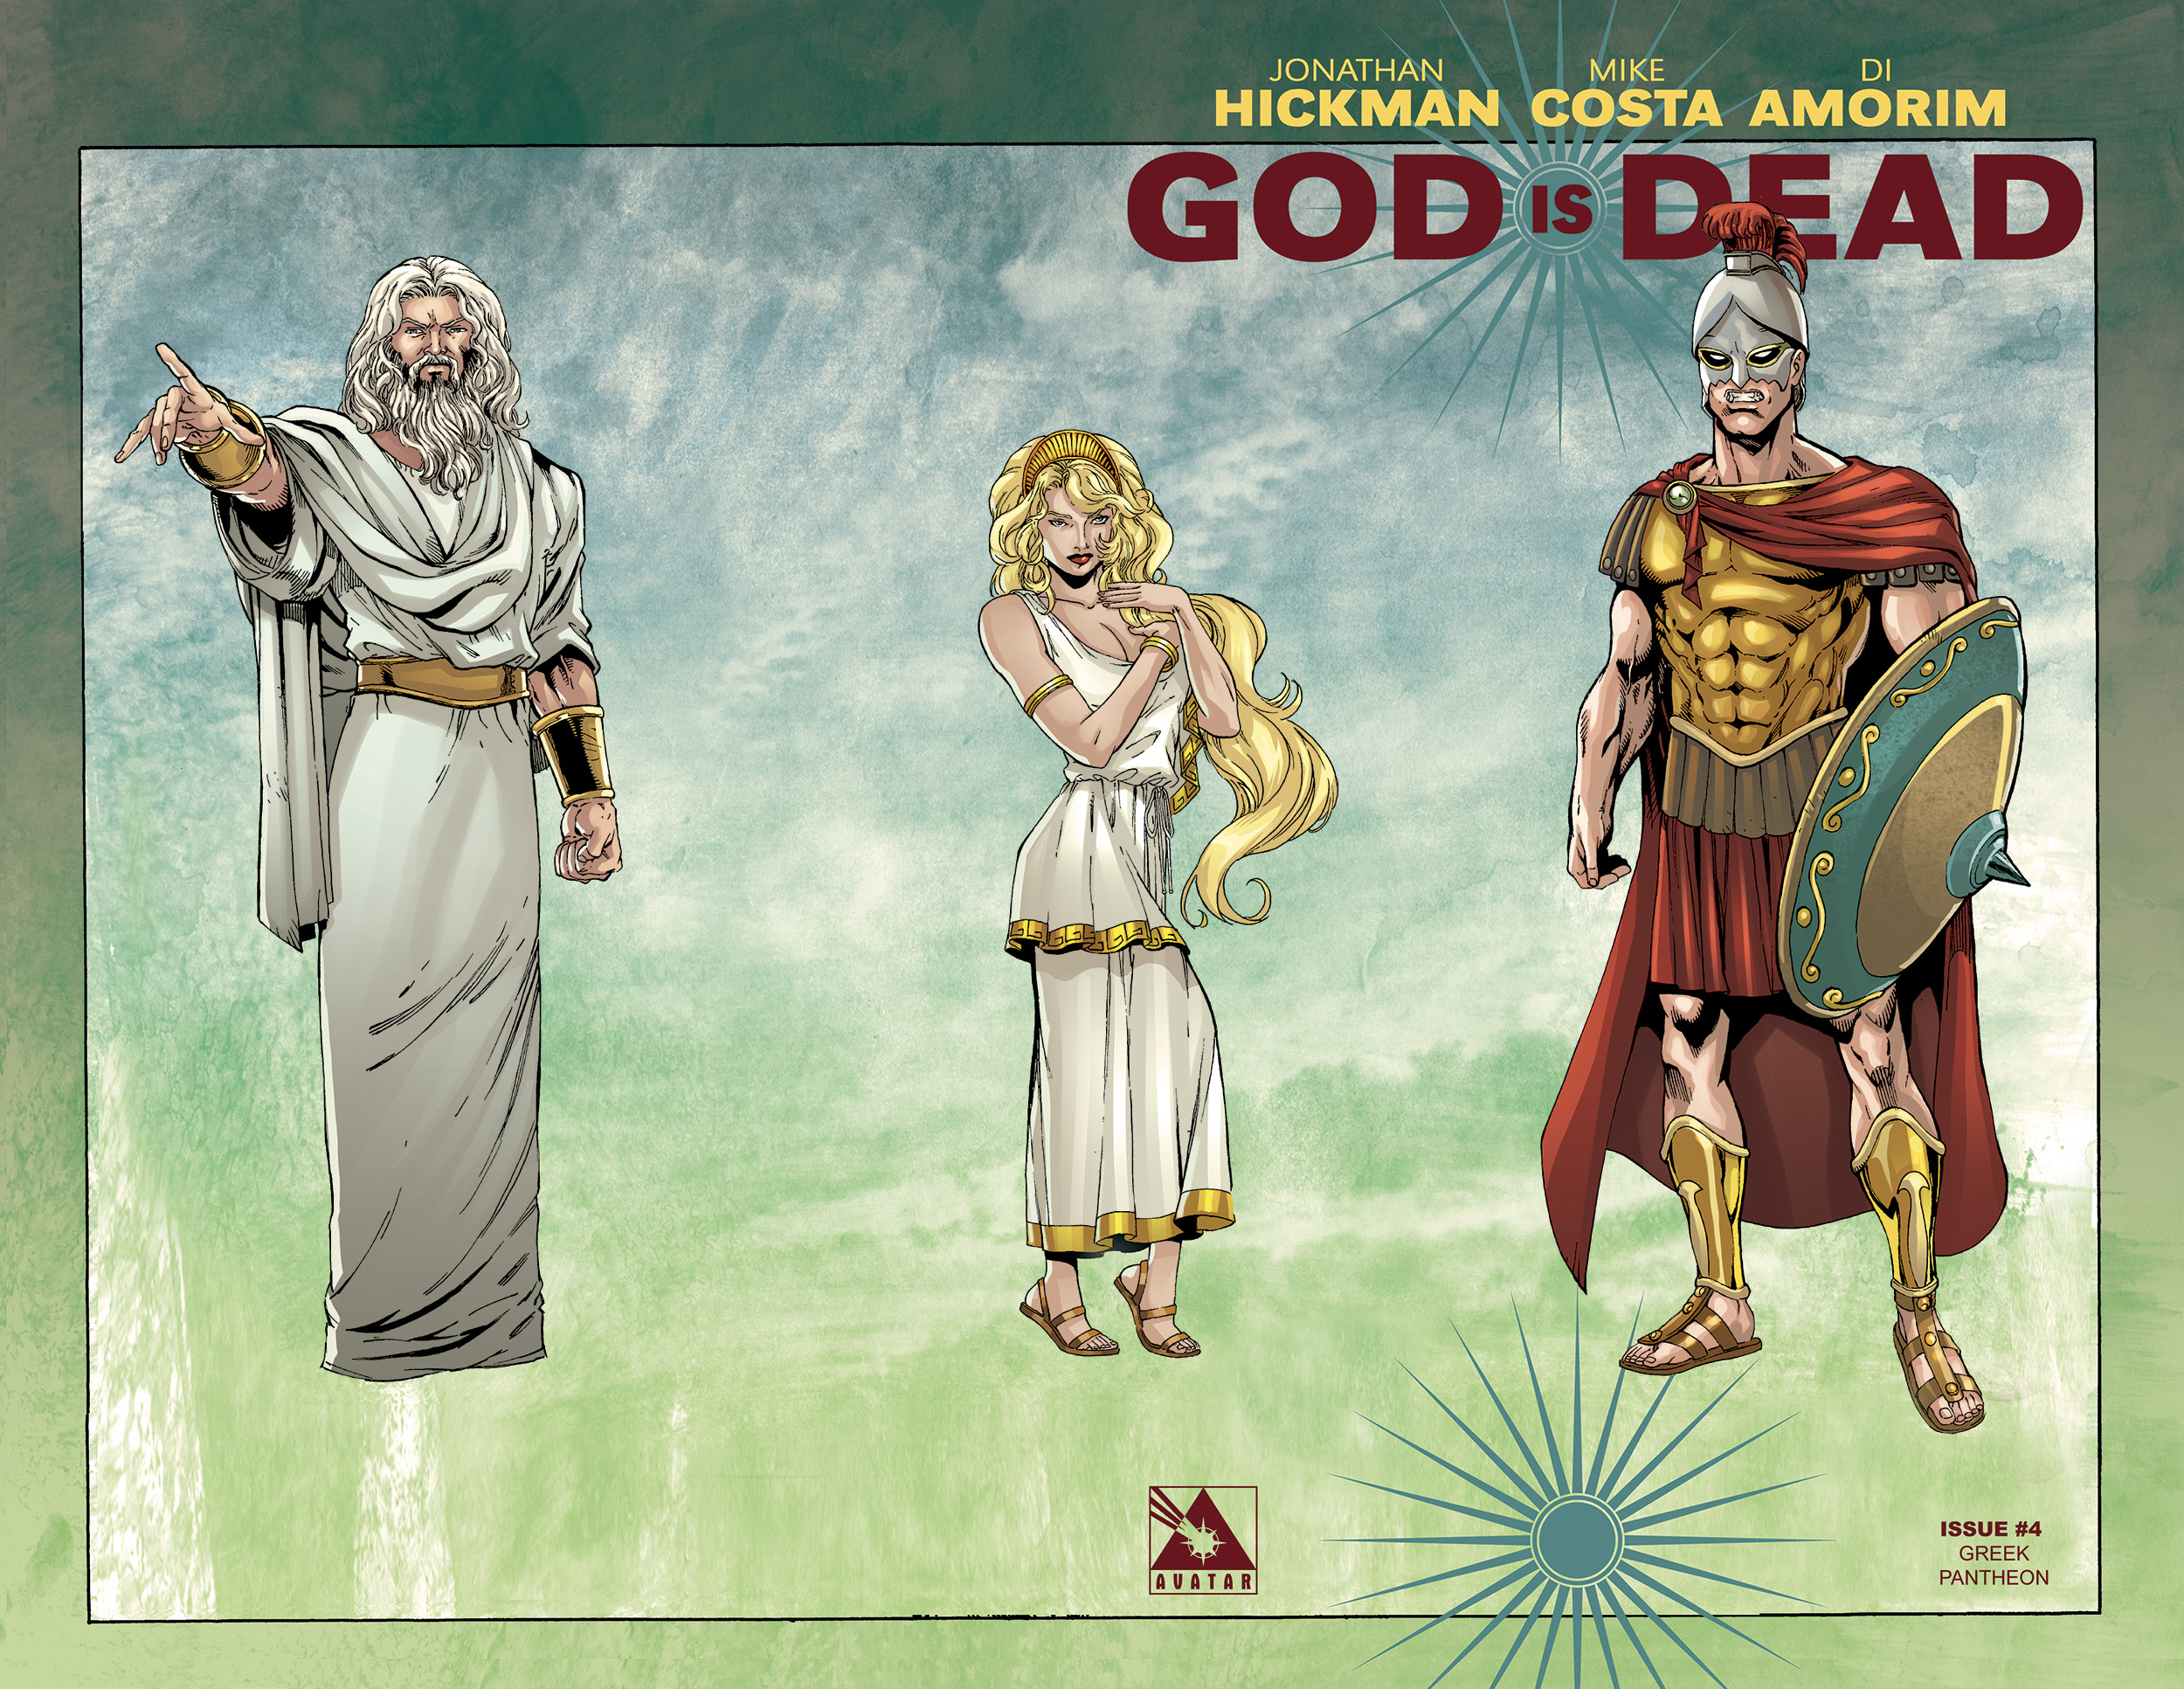 640704 Bild herunterladen comics, god is dead, gott ist tot (comics) - Hintergrundbilder und Bildschirmschoner kostenlos